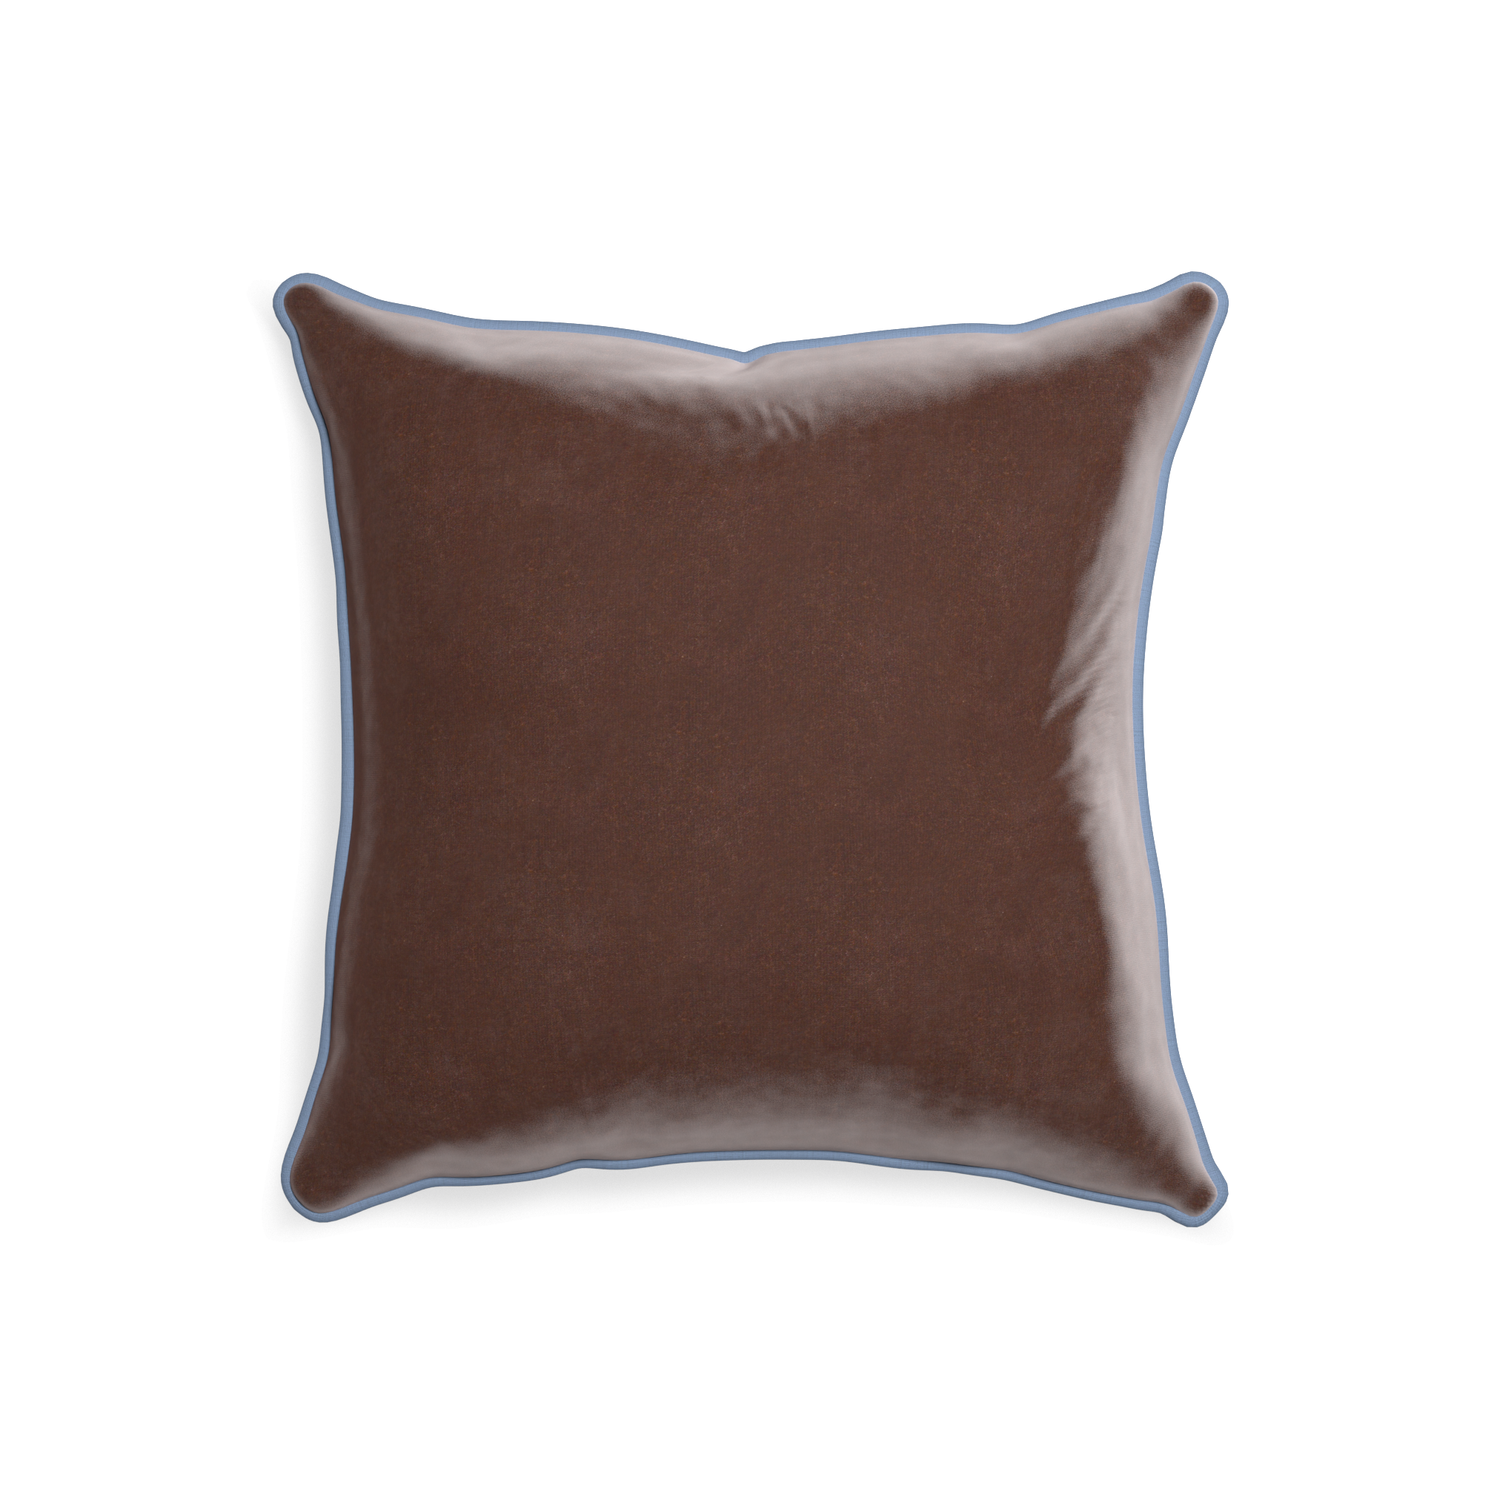 20-square walnut velvet custom pillow with sky piping on white background